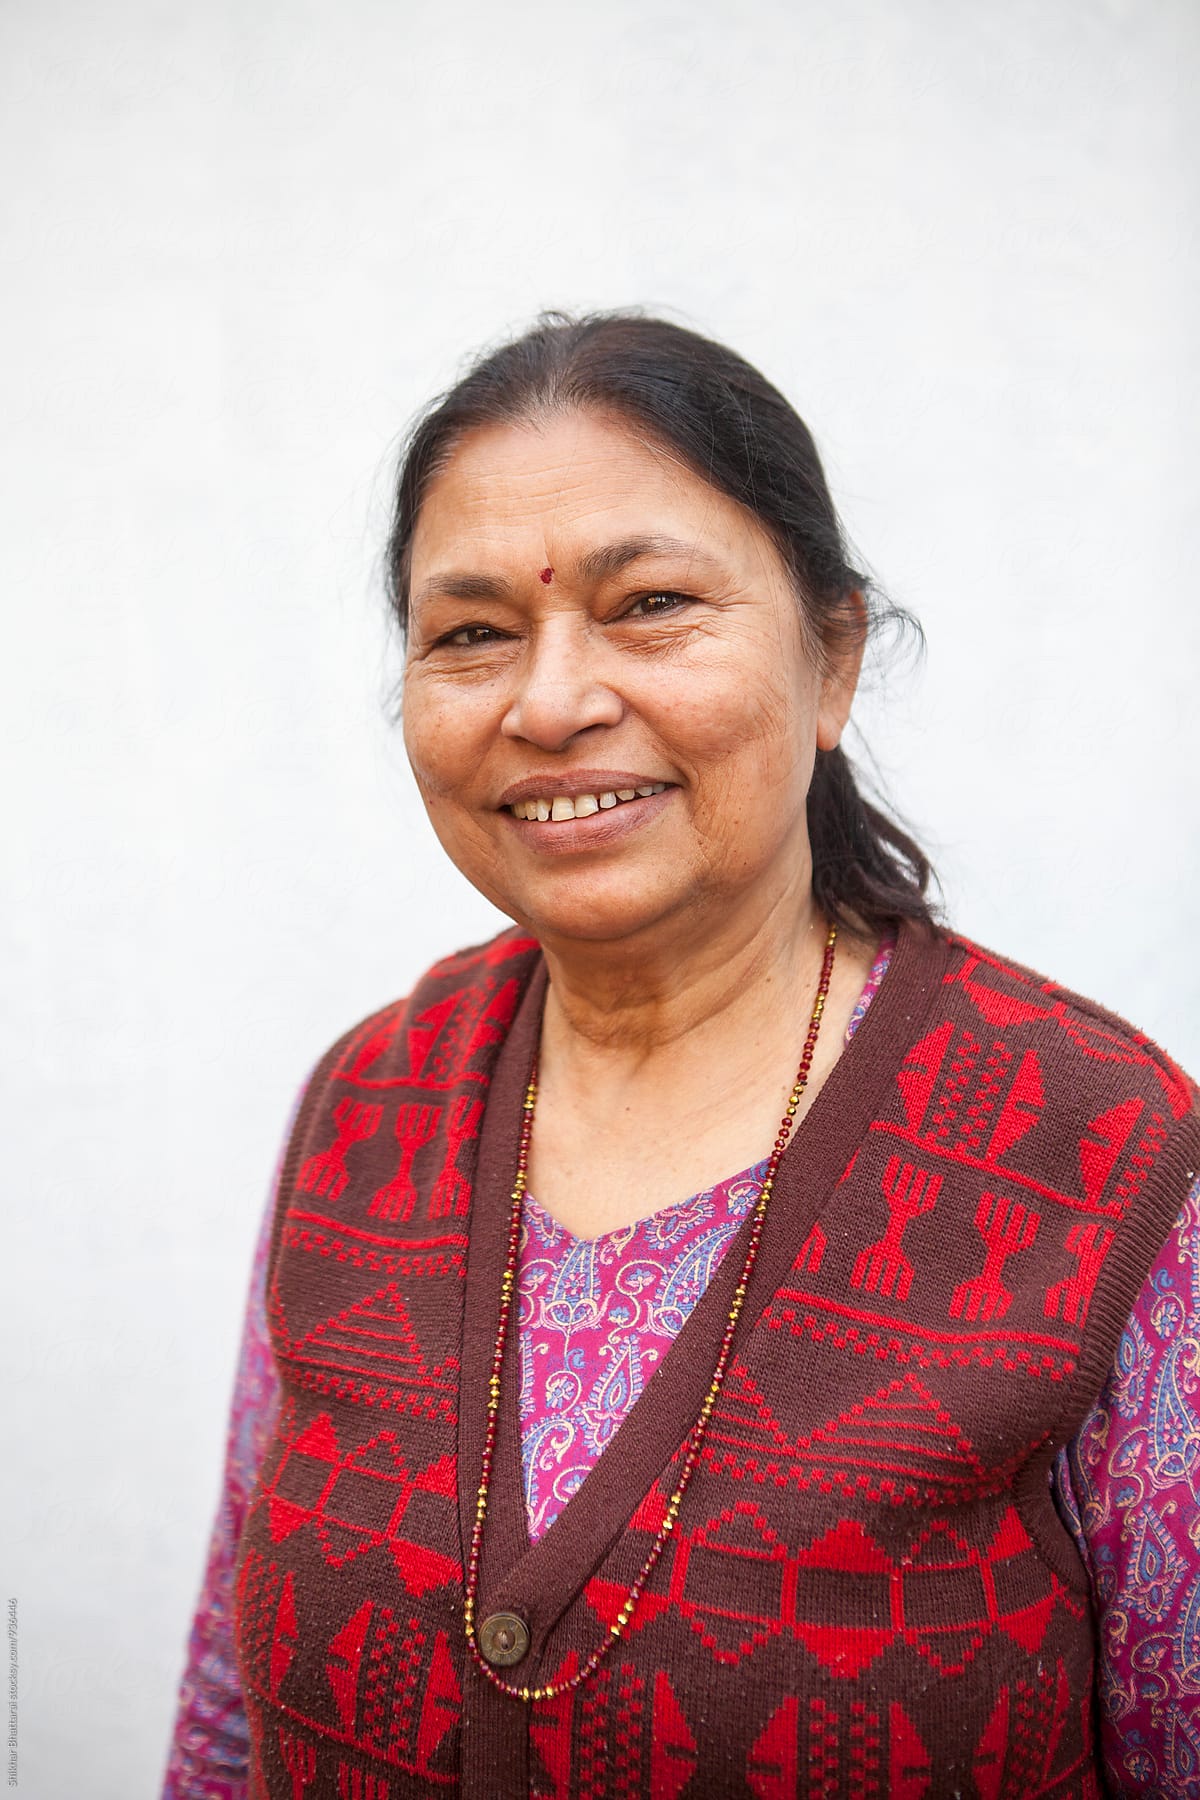 Portrait of a South Asian woman.